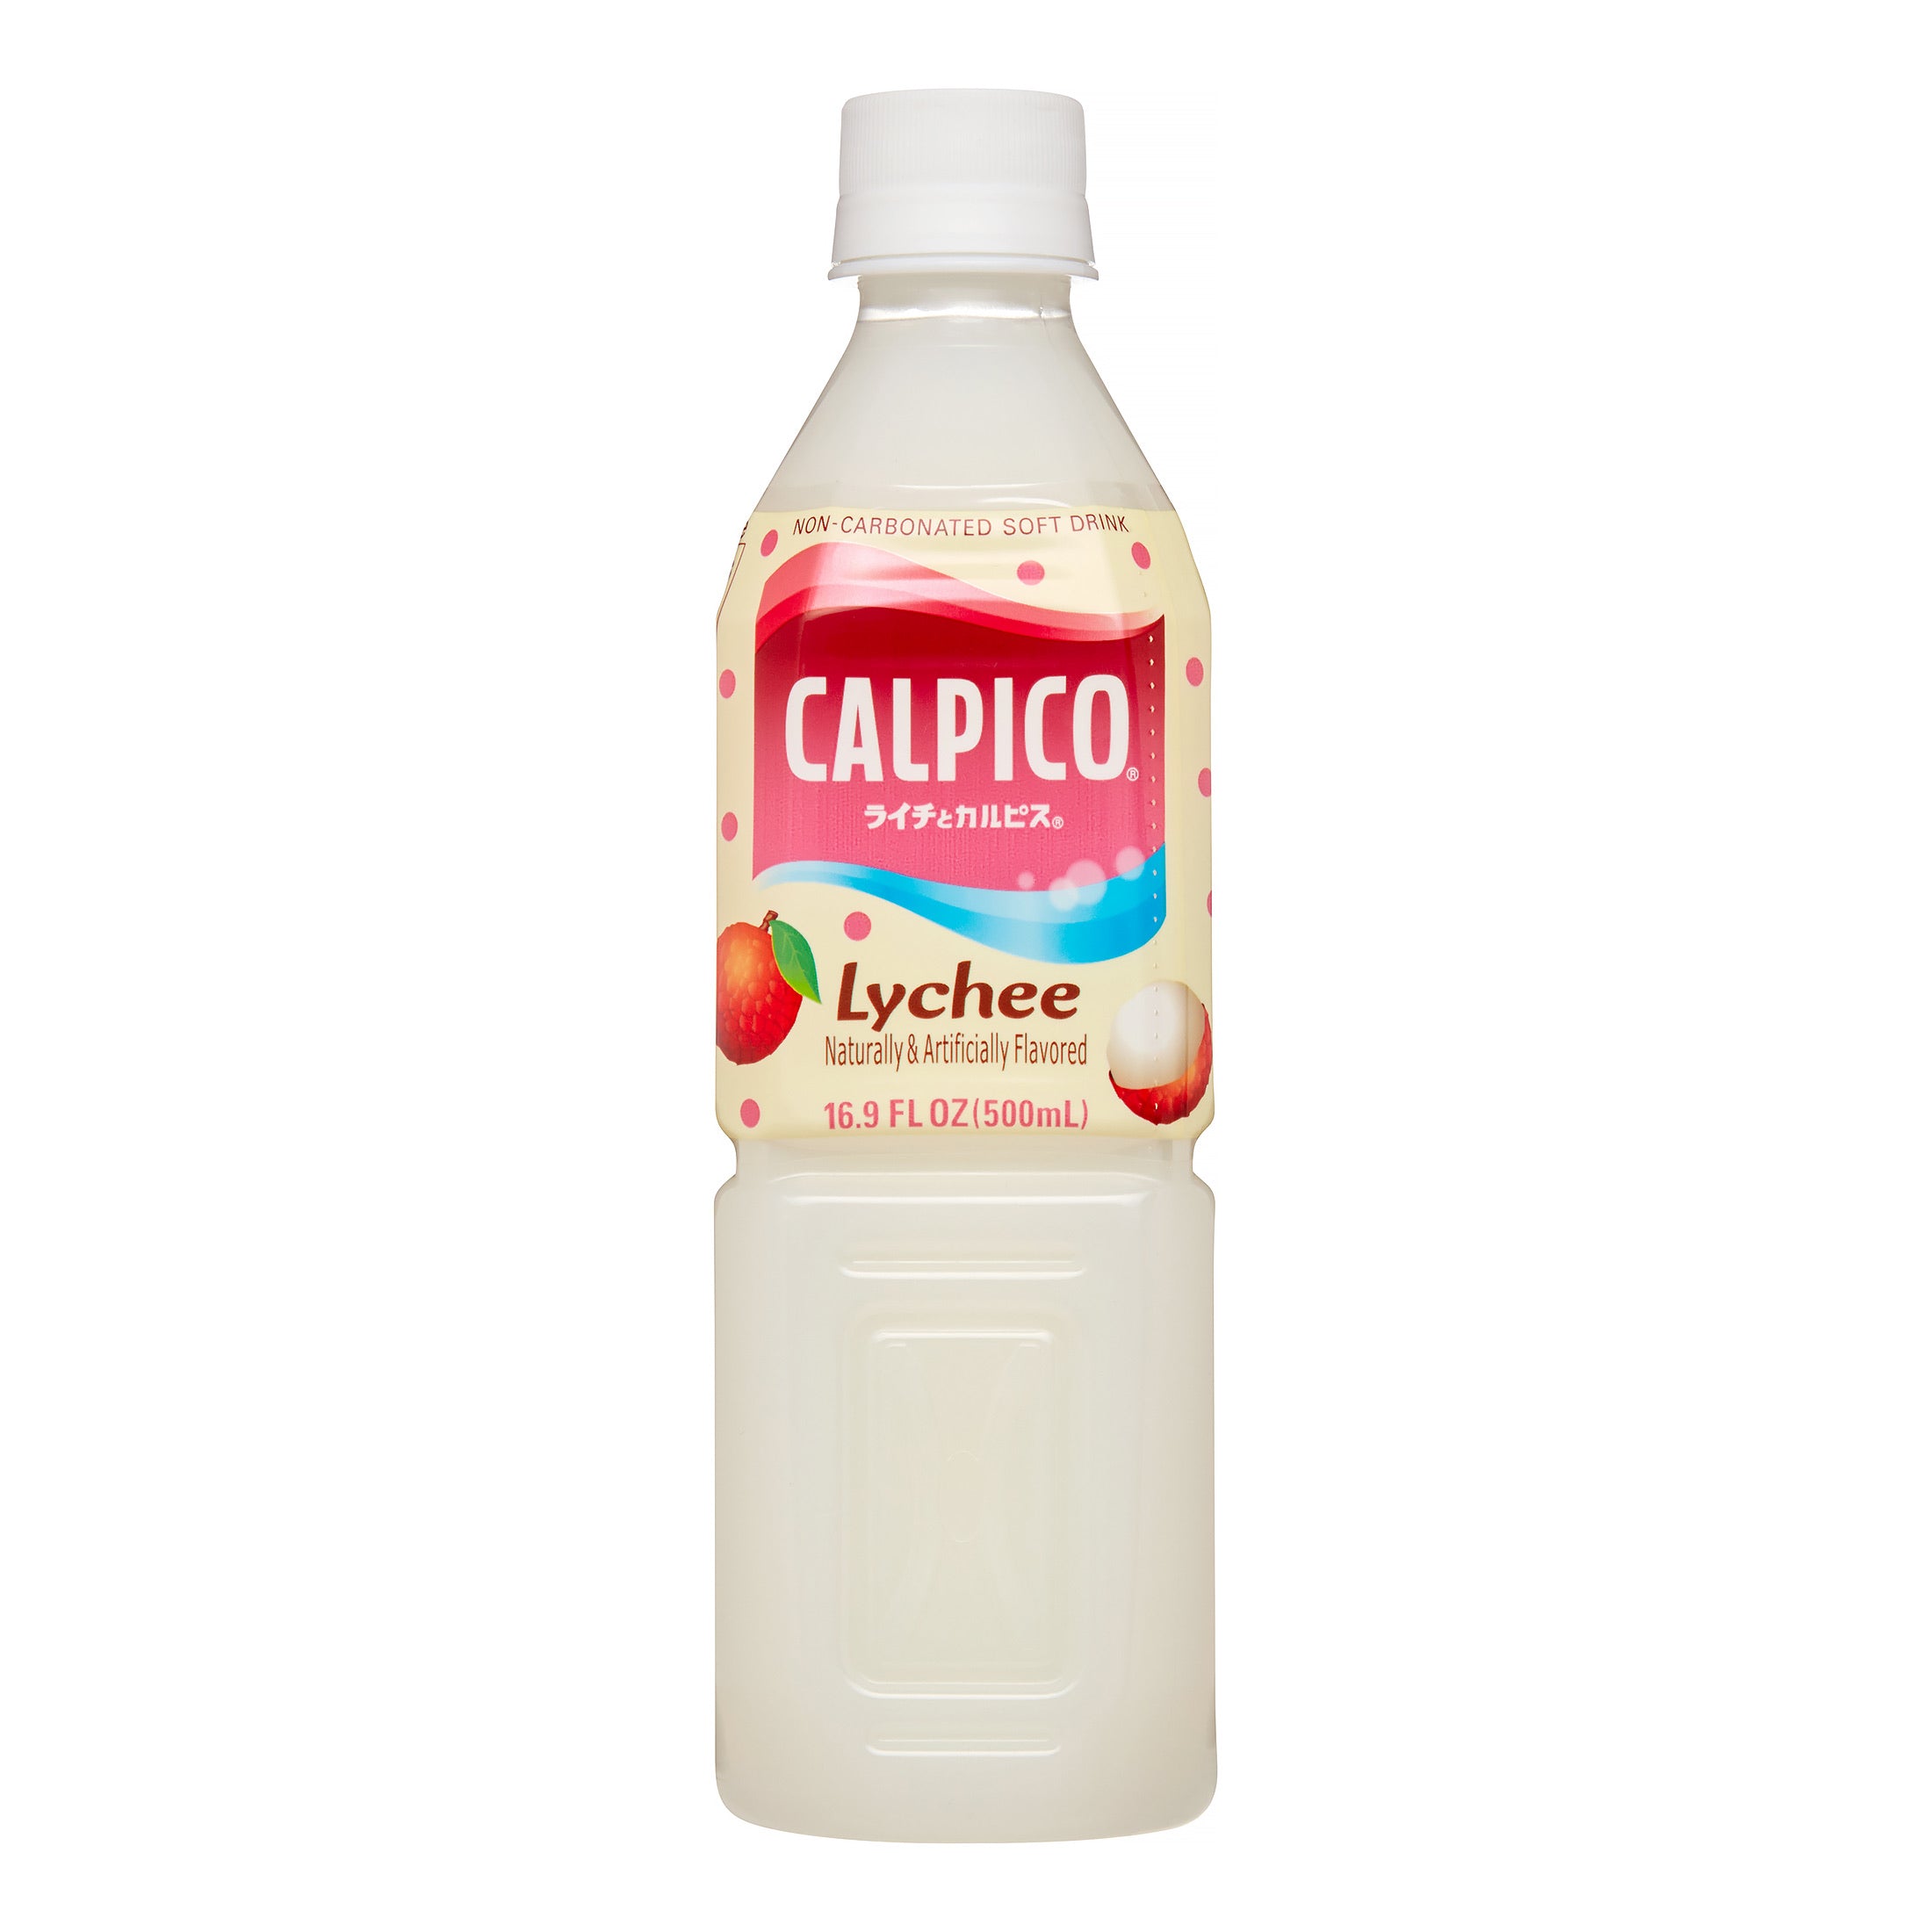 Calpico Lychee - 500ml/16.9FLoz